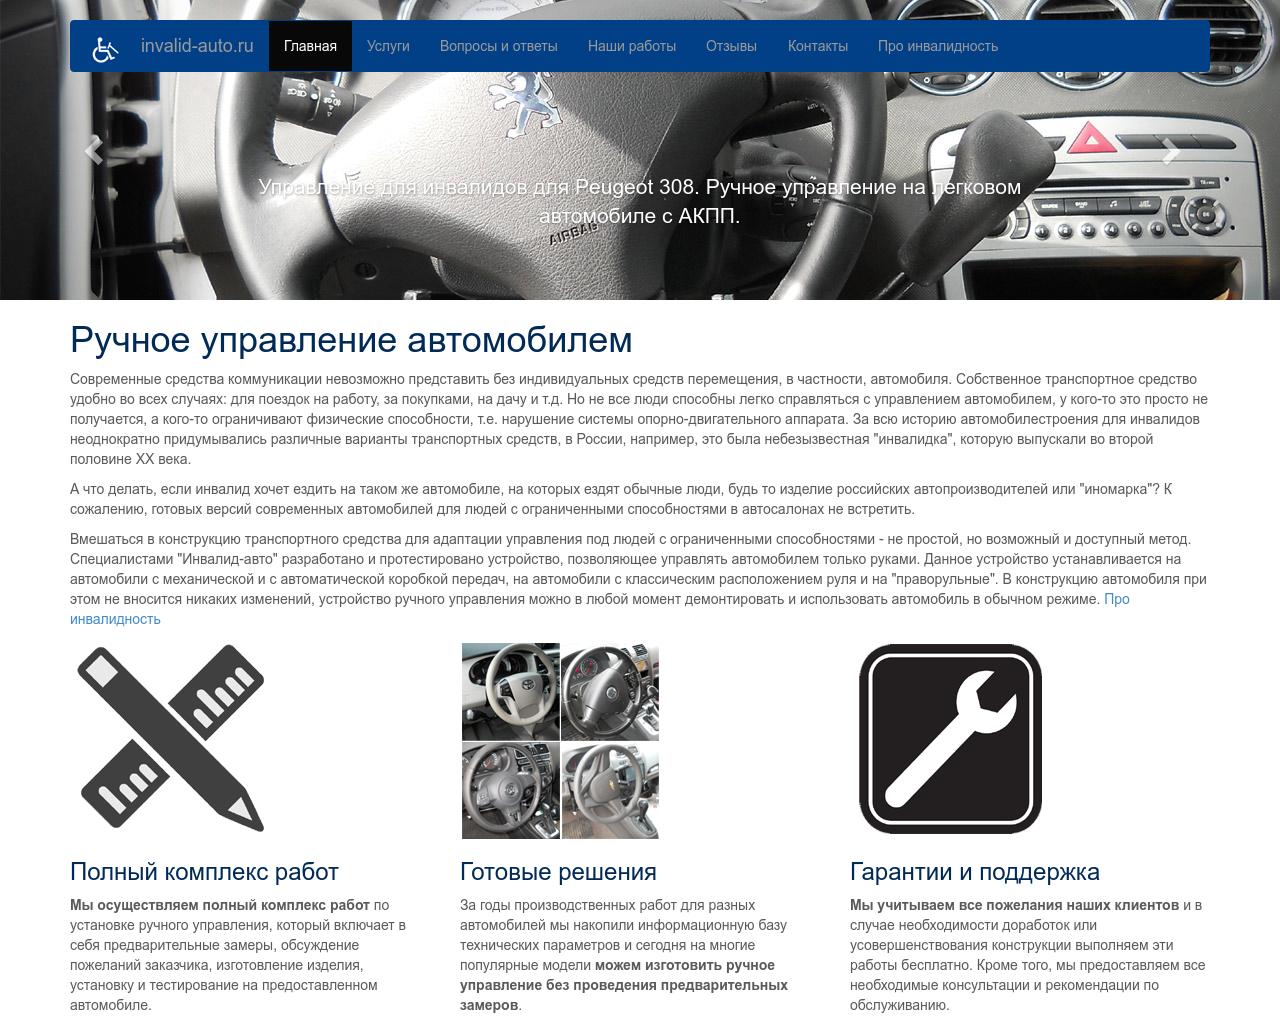 Изображение сайта invalid-auto.ru в разрешении 1280x1024